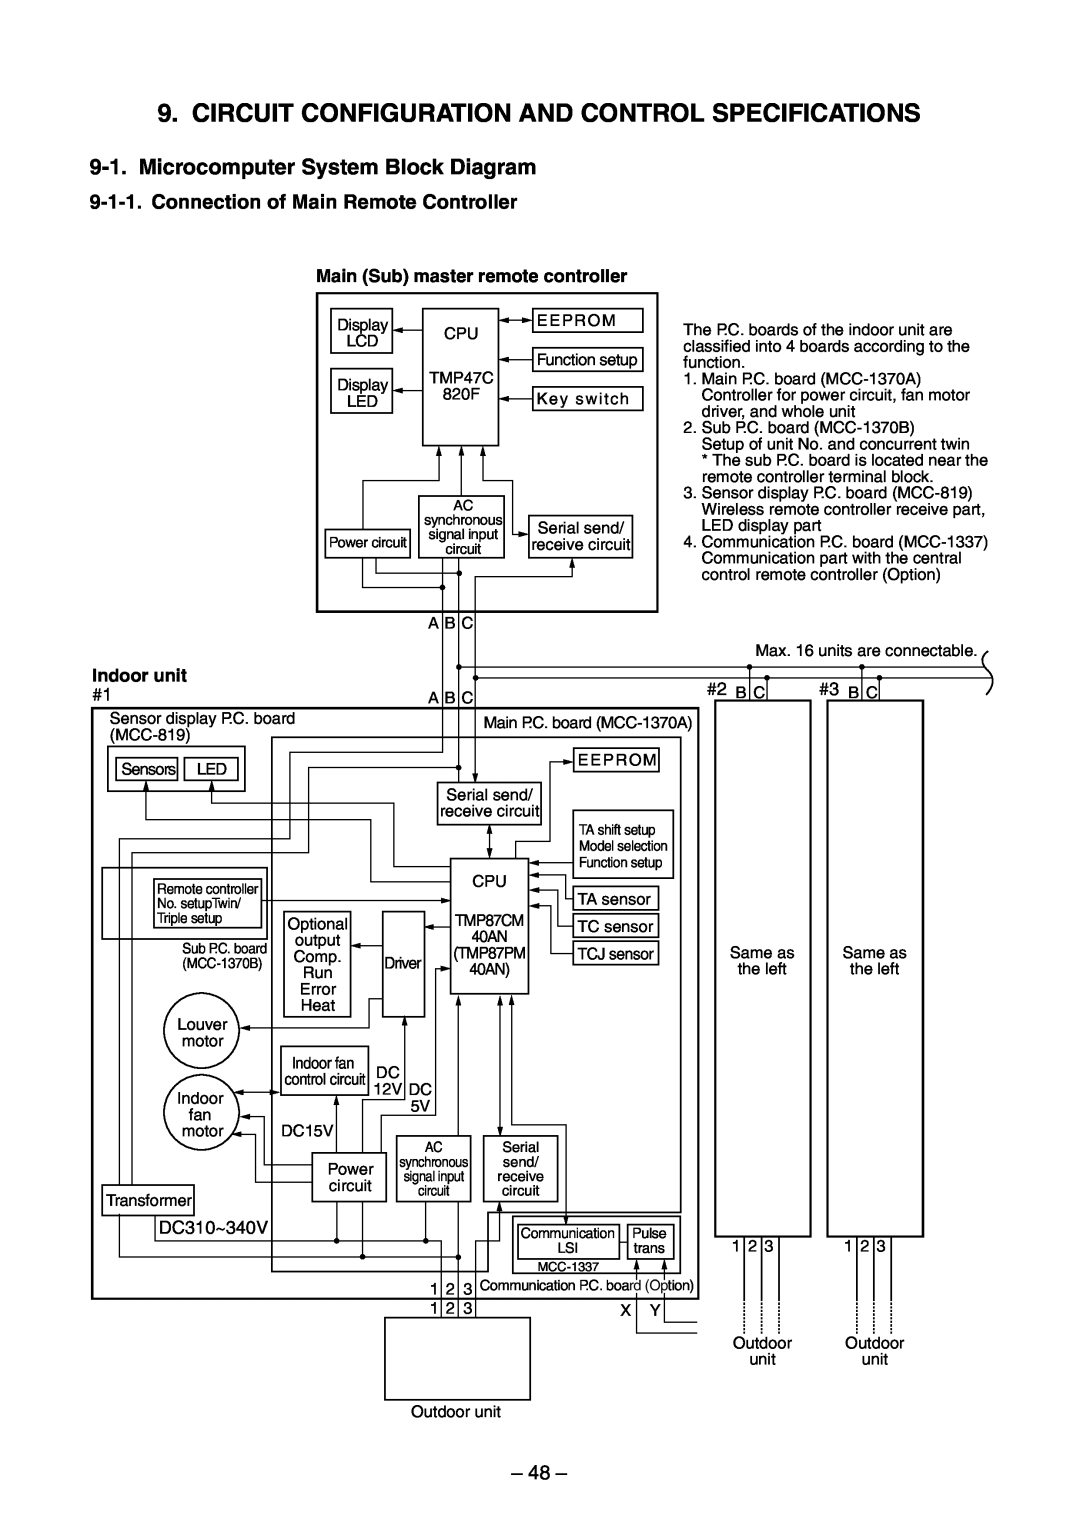 Toshiba RAV-SM800AT-E, RAV-SM800UT-E Microcomputer System Block Diagram, Connection of Main Remote Controller, Indoor unit 